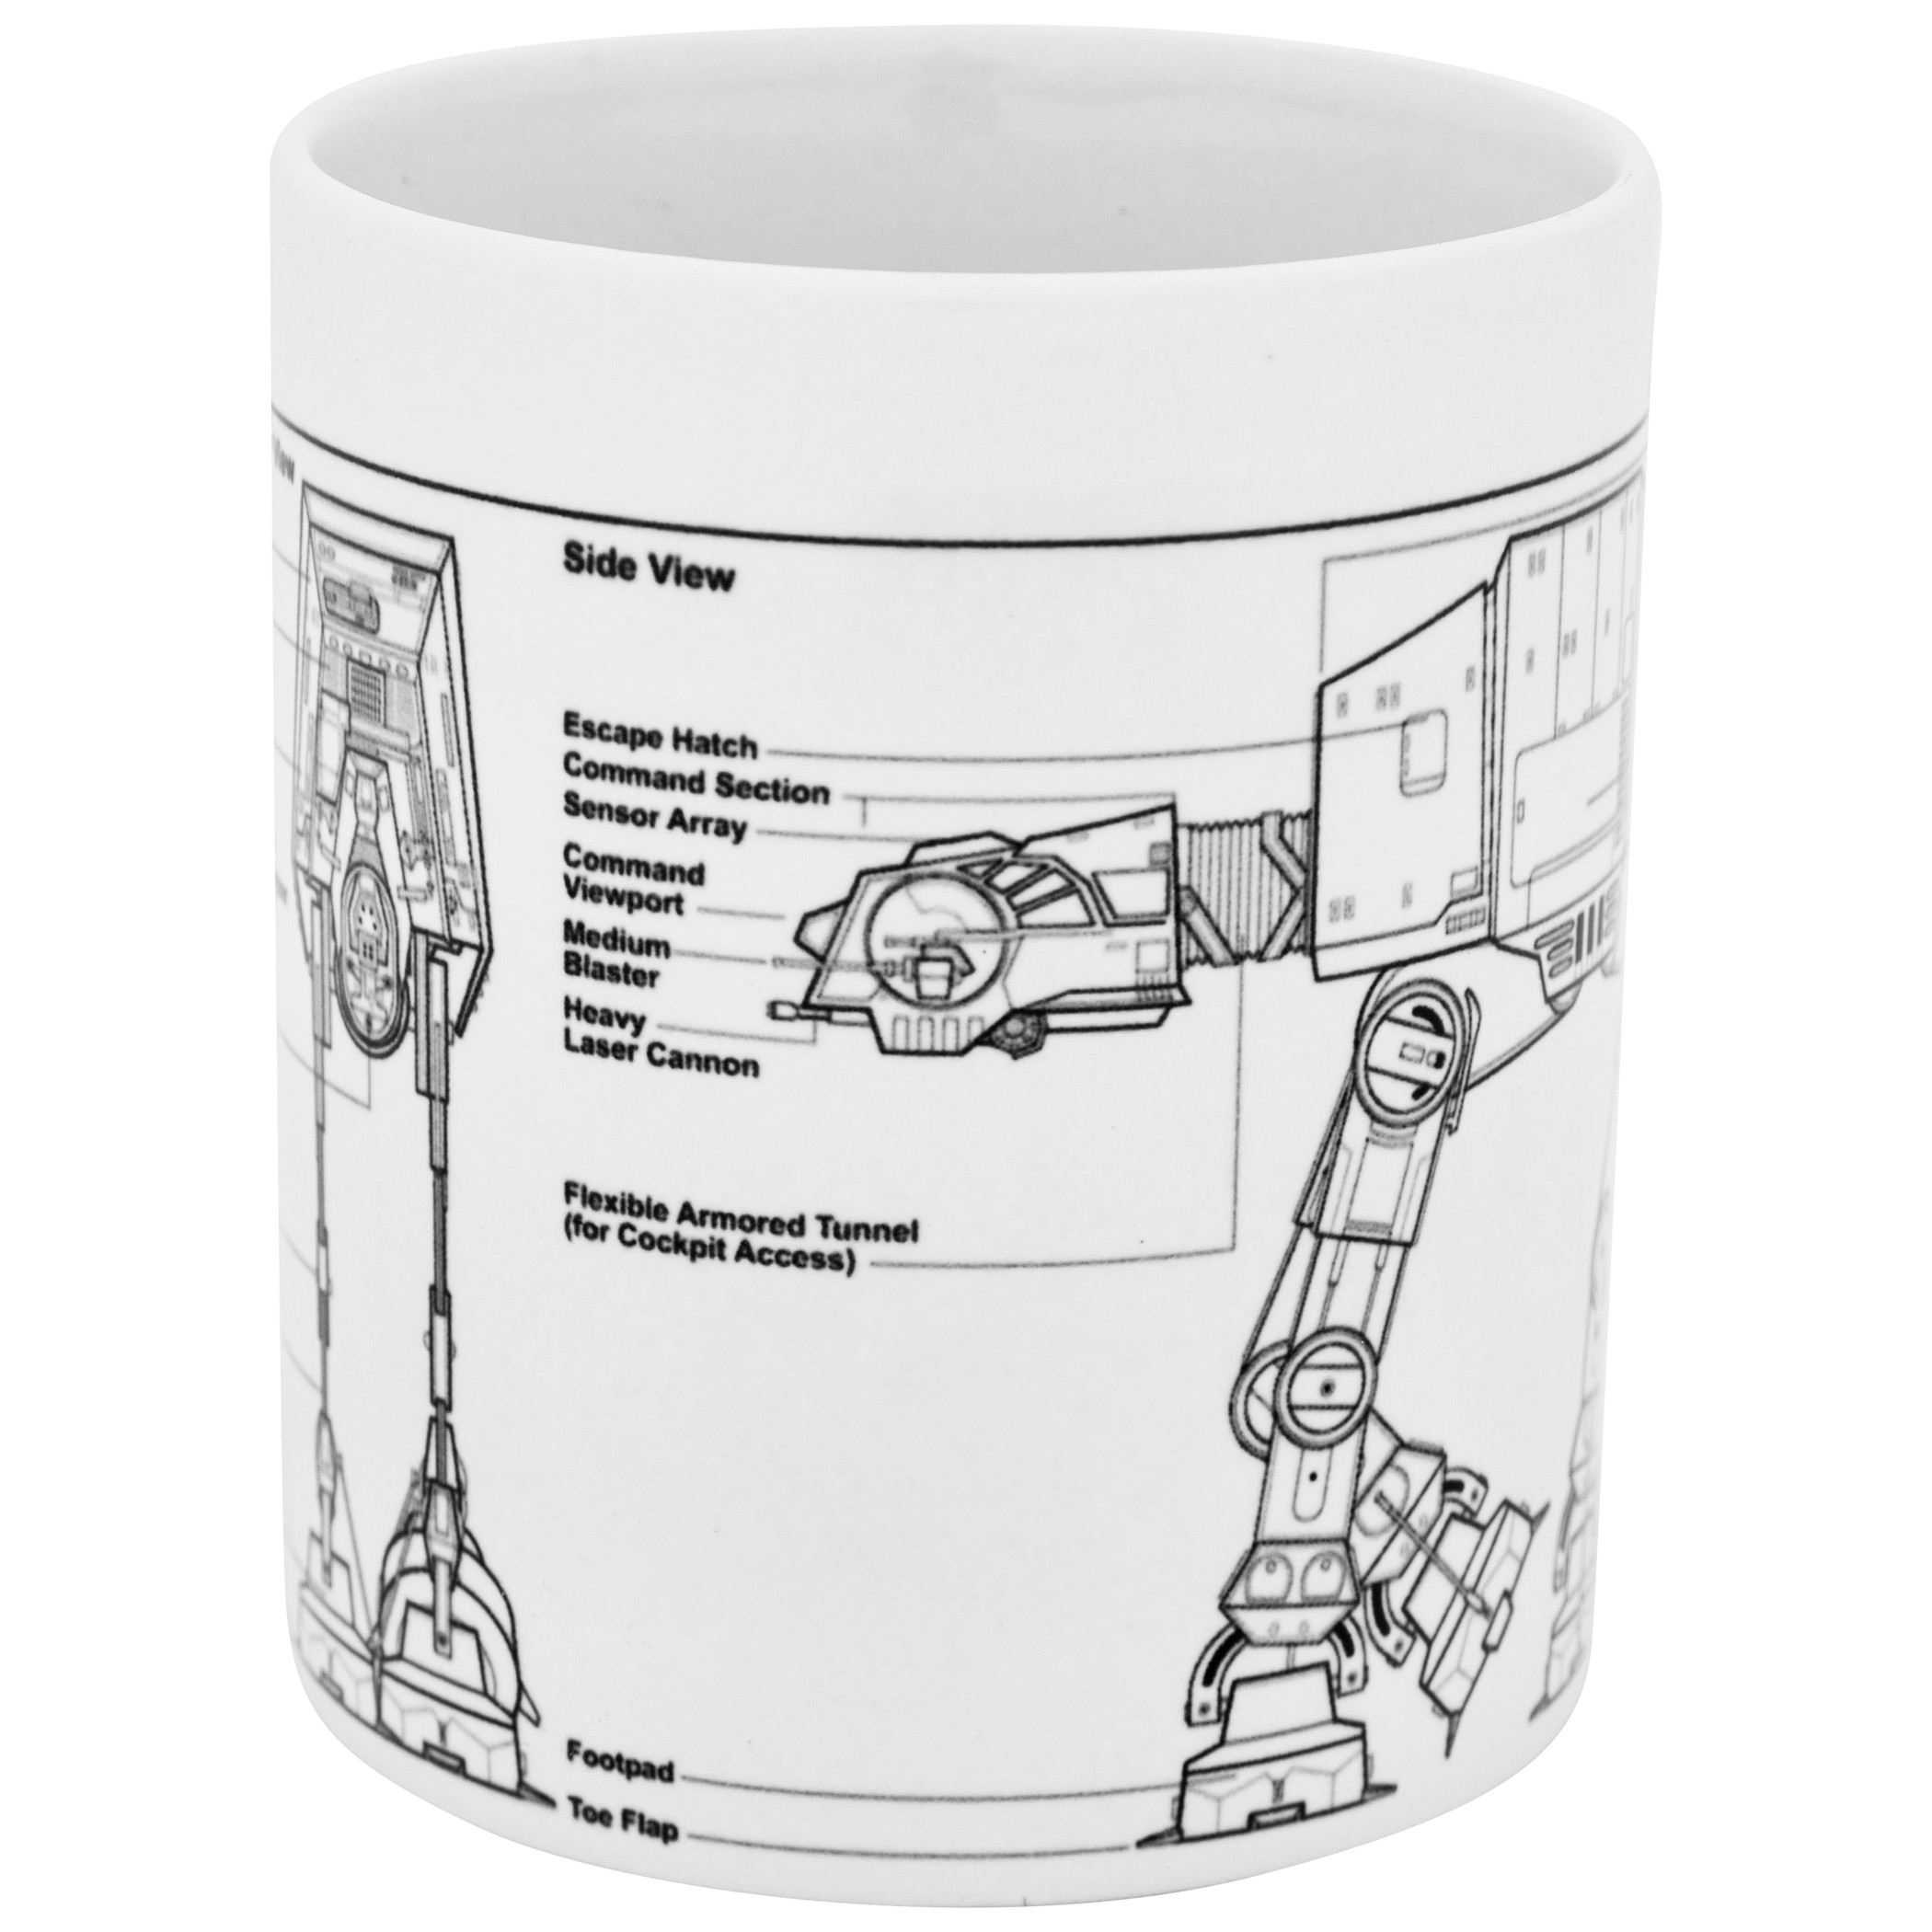 Star Wars AT-AT Fighter Diagram 11 oz. Ceramic Mug